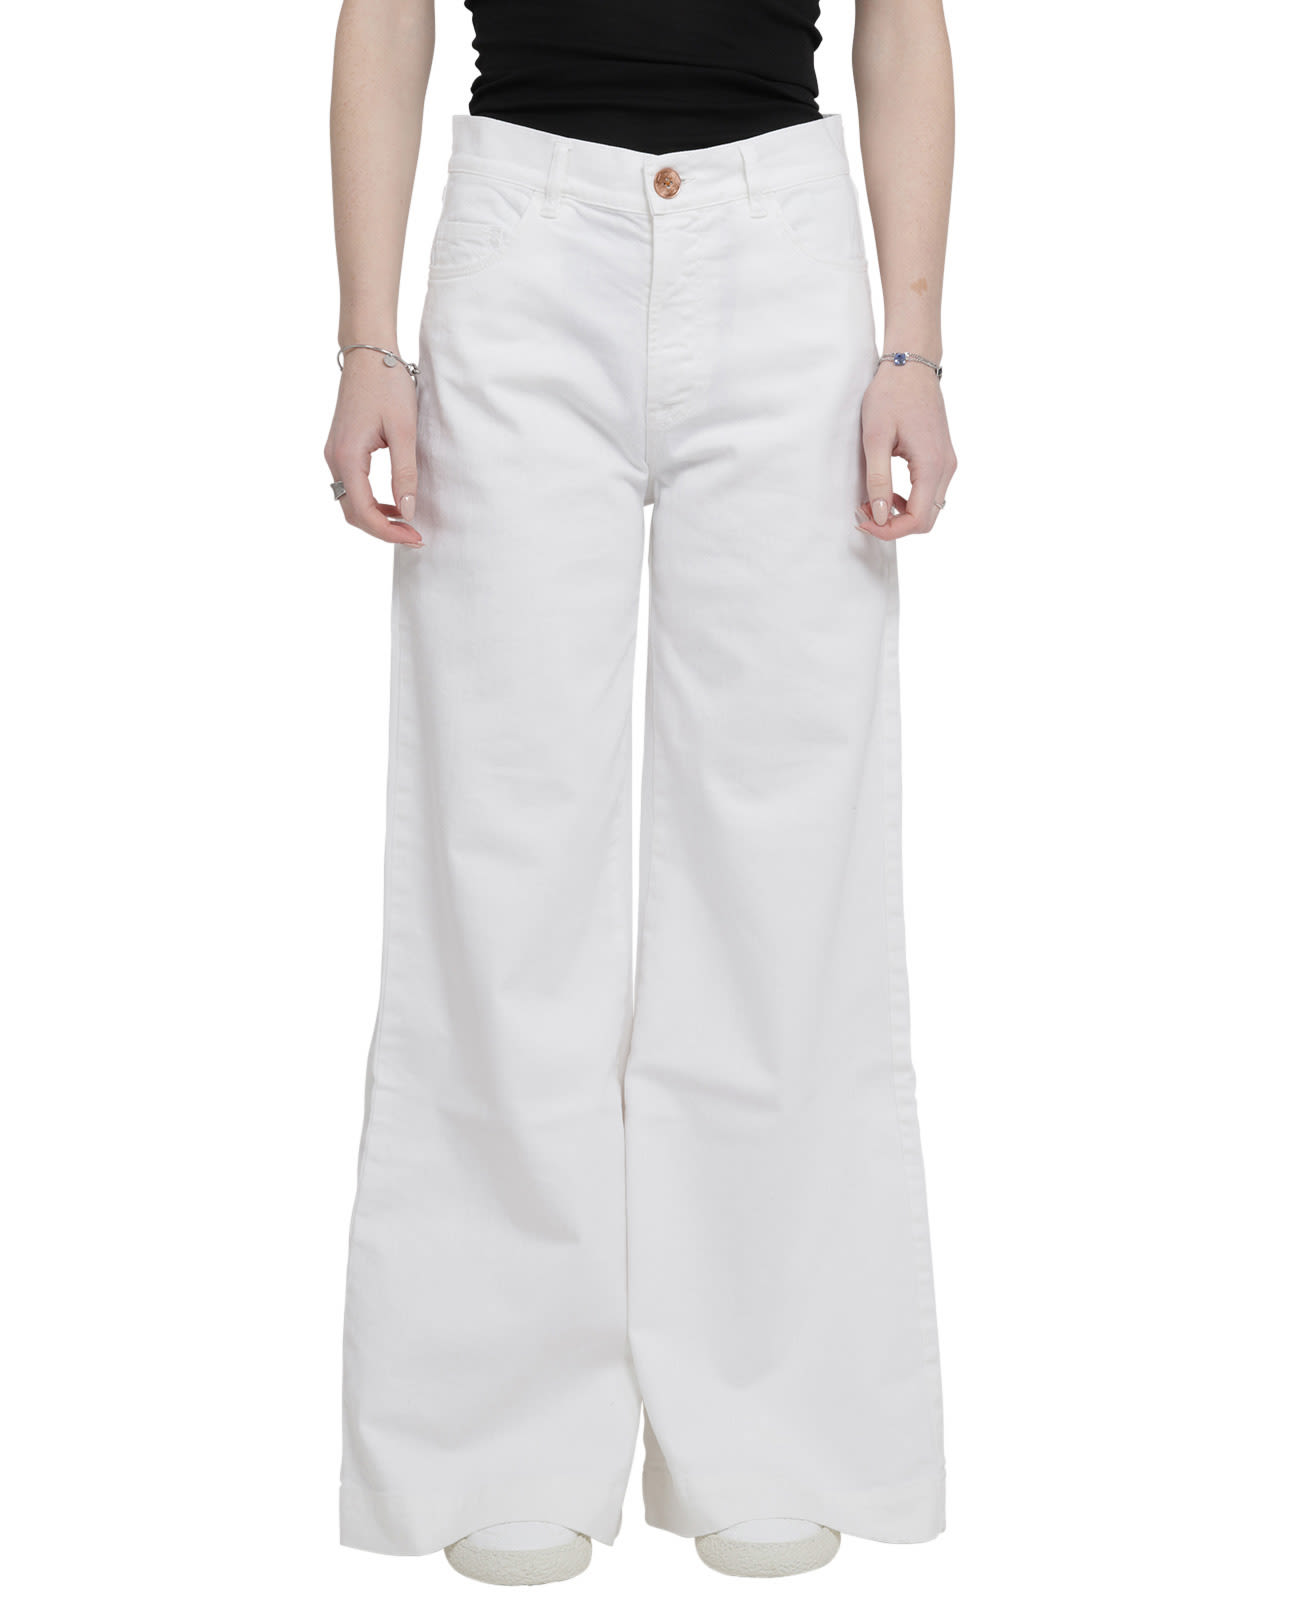 Nenah White Jeans